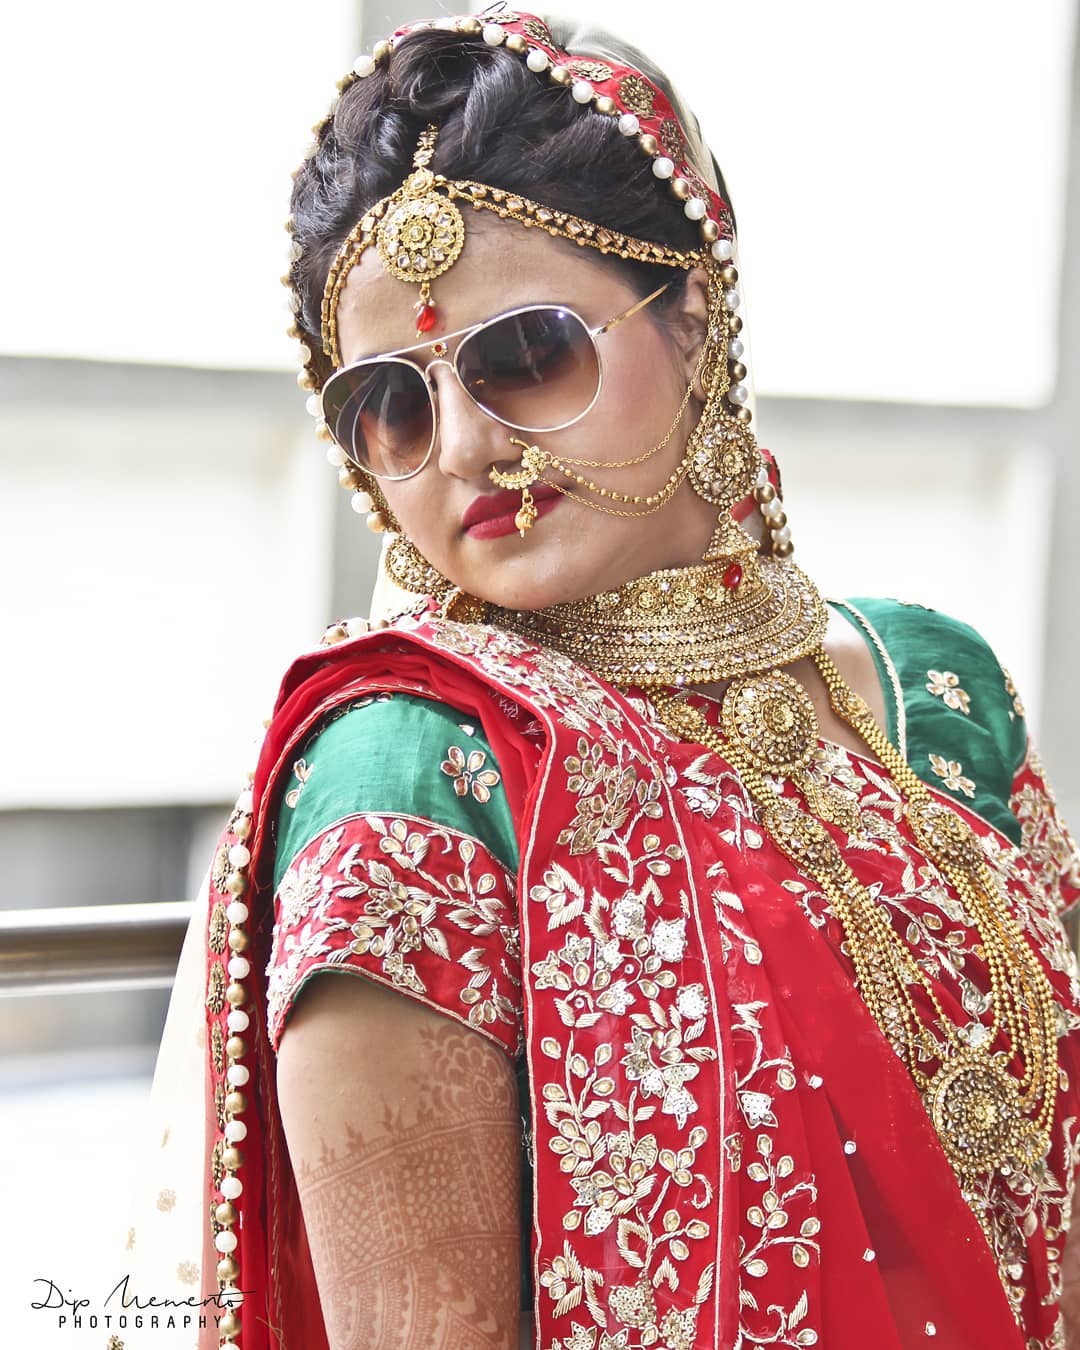 Uff! Yeh Bride's Swag, Wallaah........ 😍😍
✨✨✨✨✨✨✨✨✨✨✨✨✨✨✨✨✨ Wedding Portraits Shoot:📷 #dipmementophotography
@dip_memento_photography
@dipthakkar.clicker
https://www.facebook.com/photographybydip/ ✨✨✨✨✨✨✨✨✨✨✨✨✨✨✨✨✨
#india #indian #photo #photography #photographer #pic #storiesofindia #candidshoot #indianphotography #indianphotographers 
#canvasofindia #weddingportrait
 #streetphotographyindia #ahmedabad #oph #official_photographers_hub #indianshutterbugs #indiaclicks #_coi #india_everyday #i_hobbygraphy #igersoftheday #ahmedabad_diaries #dslr_official #weddingphotographer #india_clicks #_soimumbai #indianphotography #photographers_of_india #destinationwedding #9924227745 #dipmementophotography #dip_memento_photography